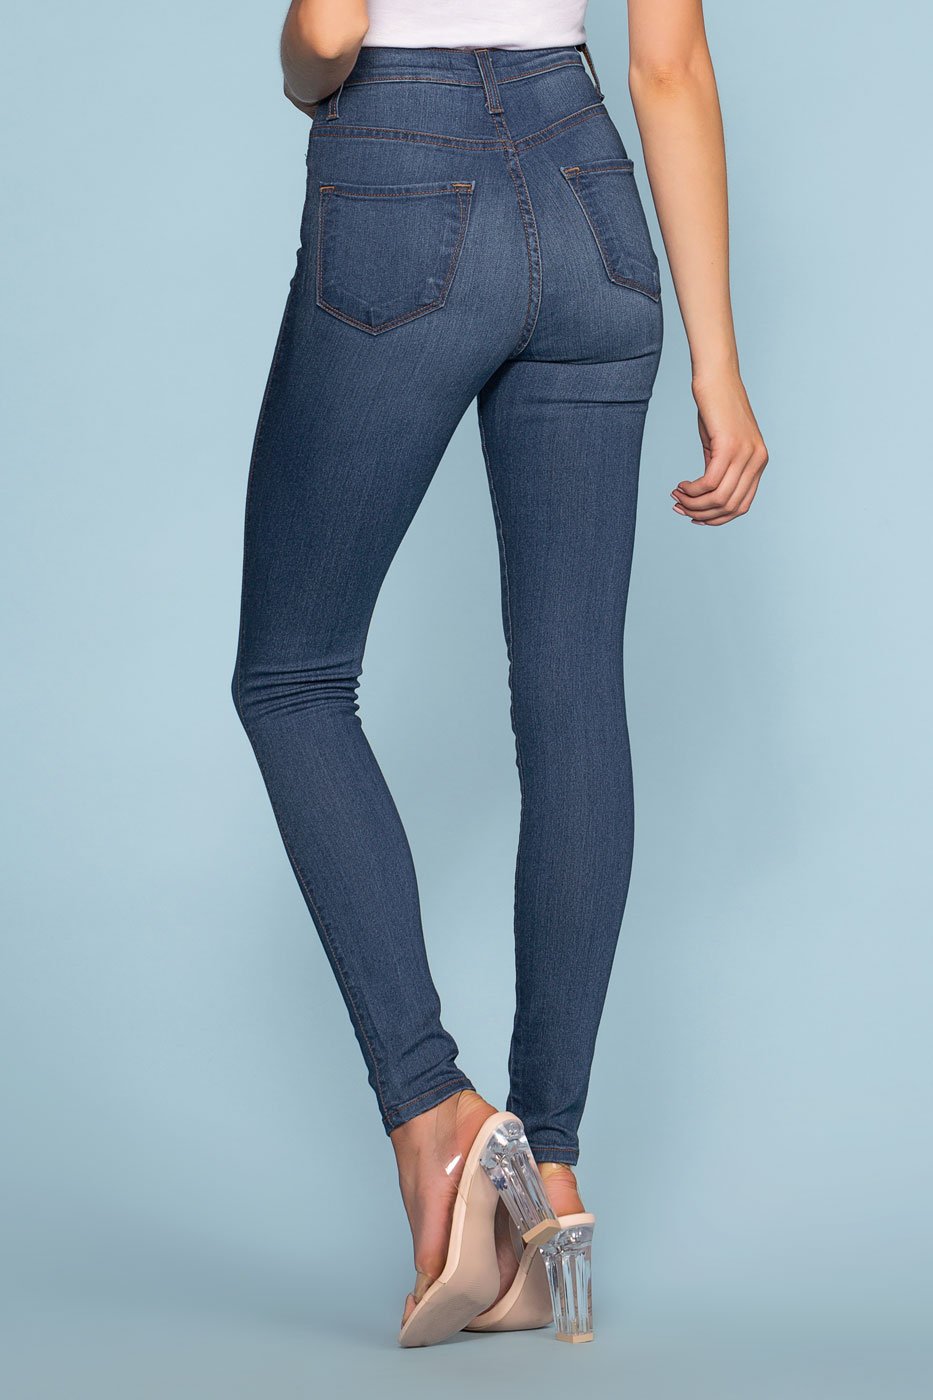 Pants - Mika High Waisted Jeans - Medium Wash